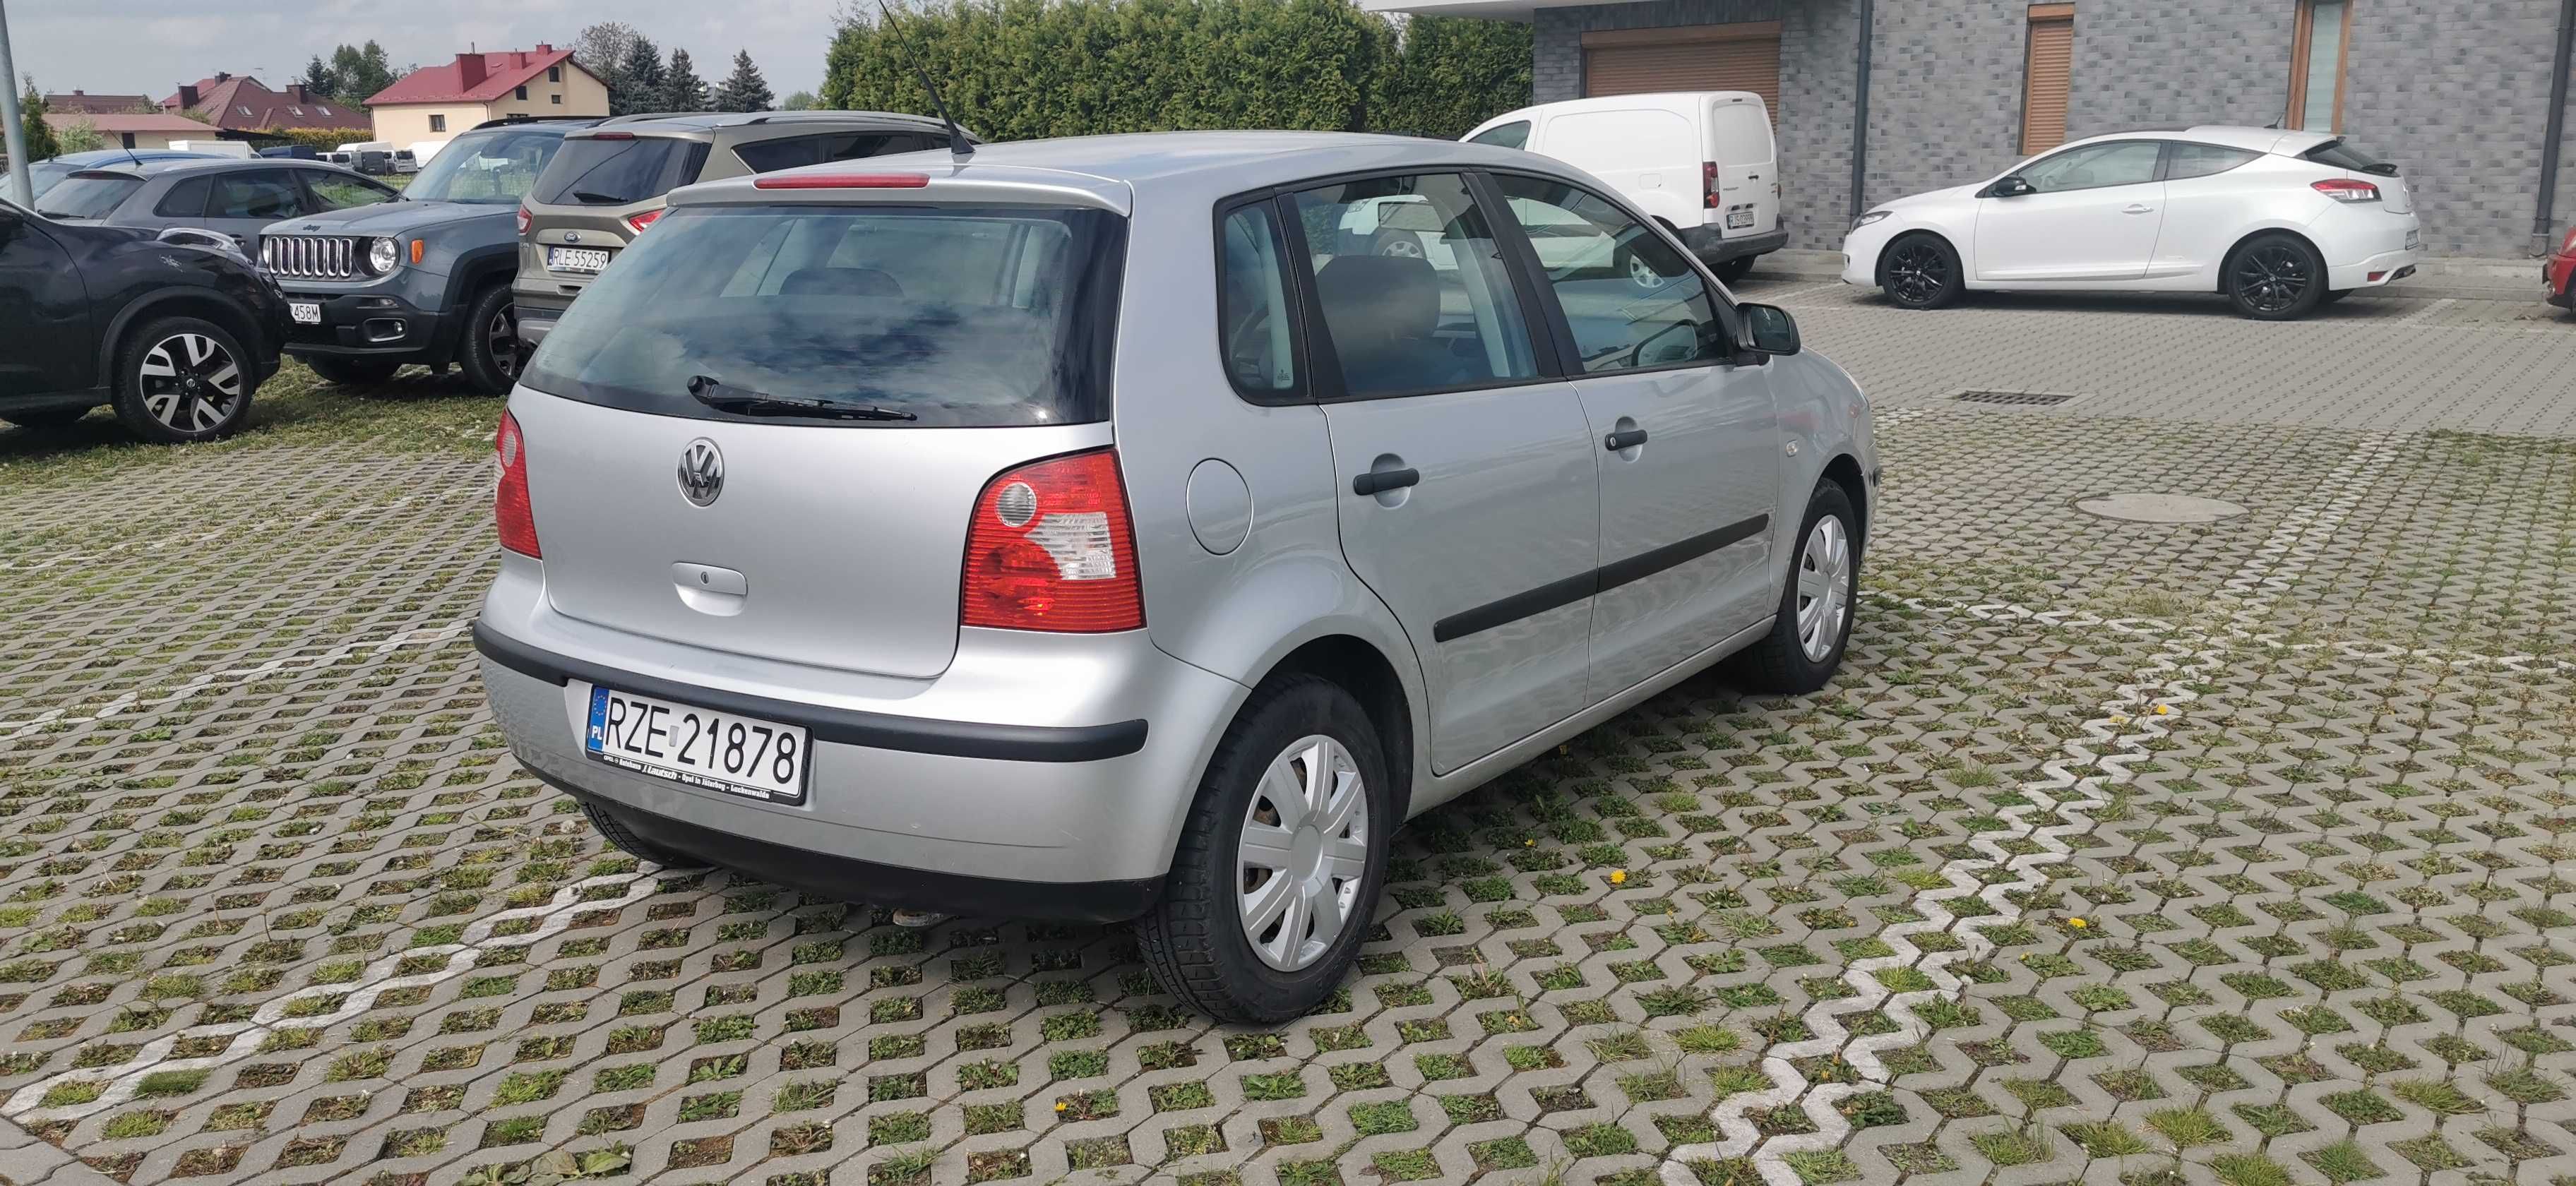 Volkswagen Polo 1.4 MPI